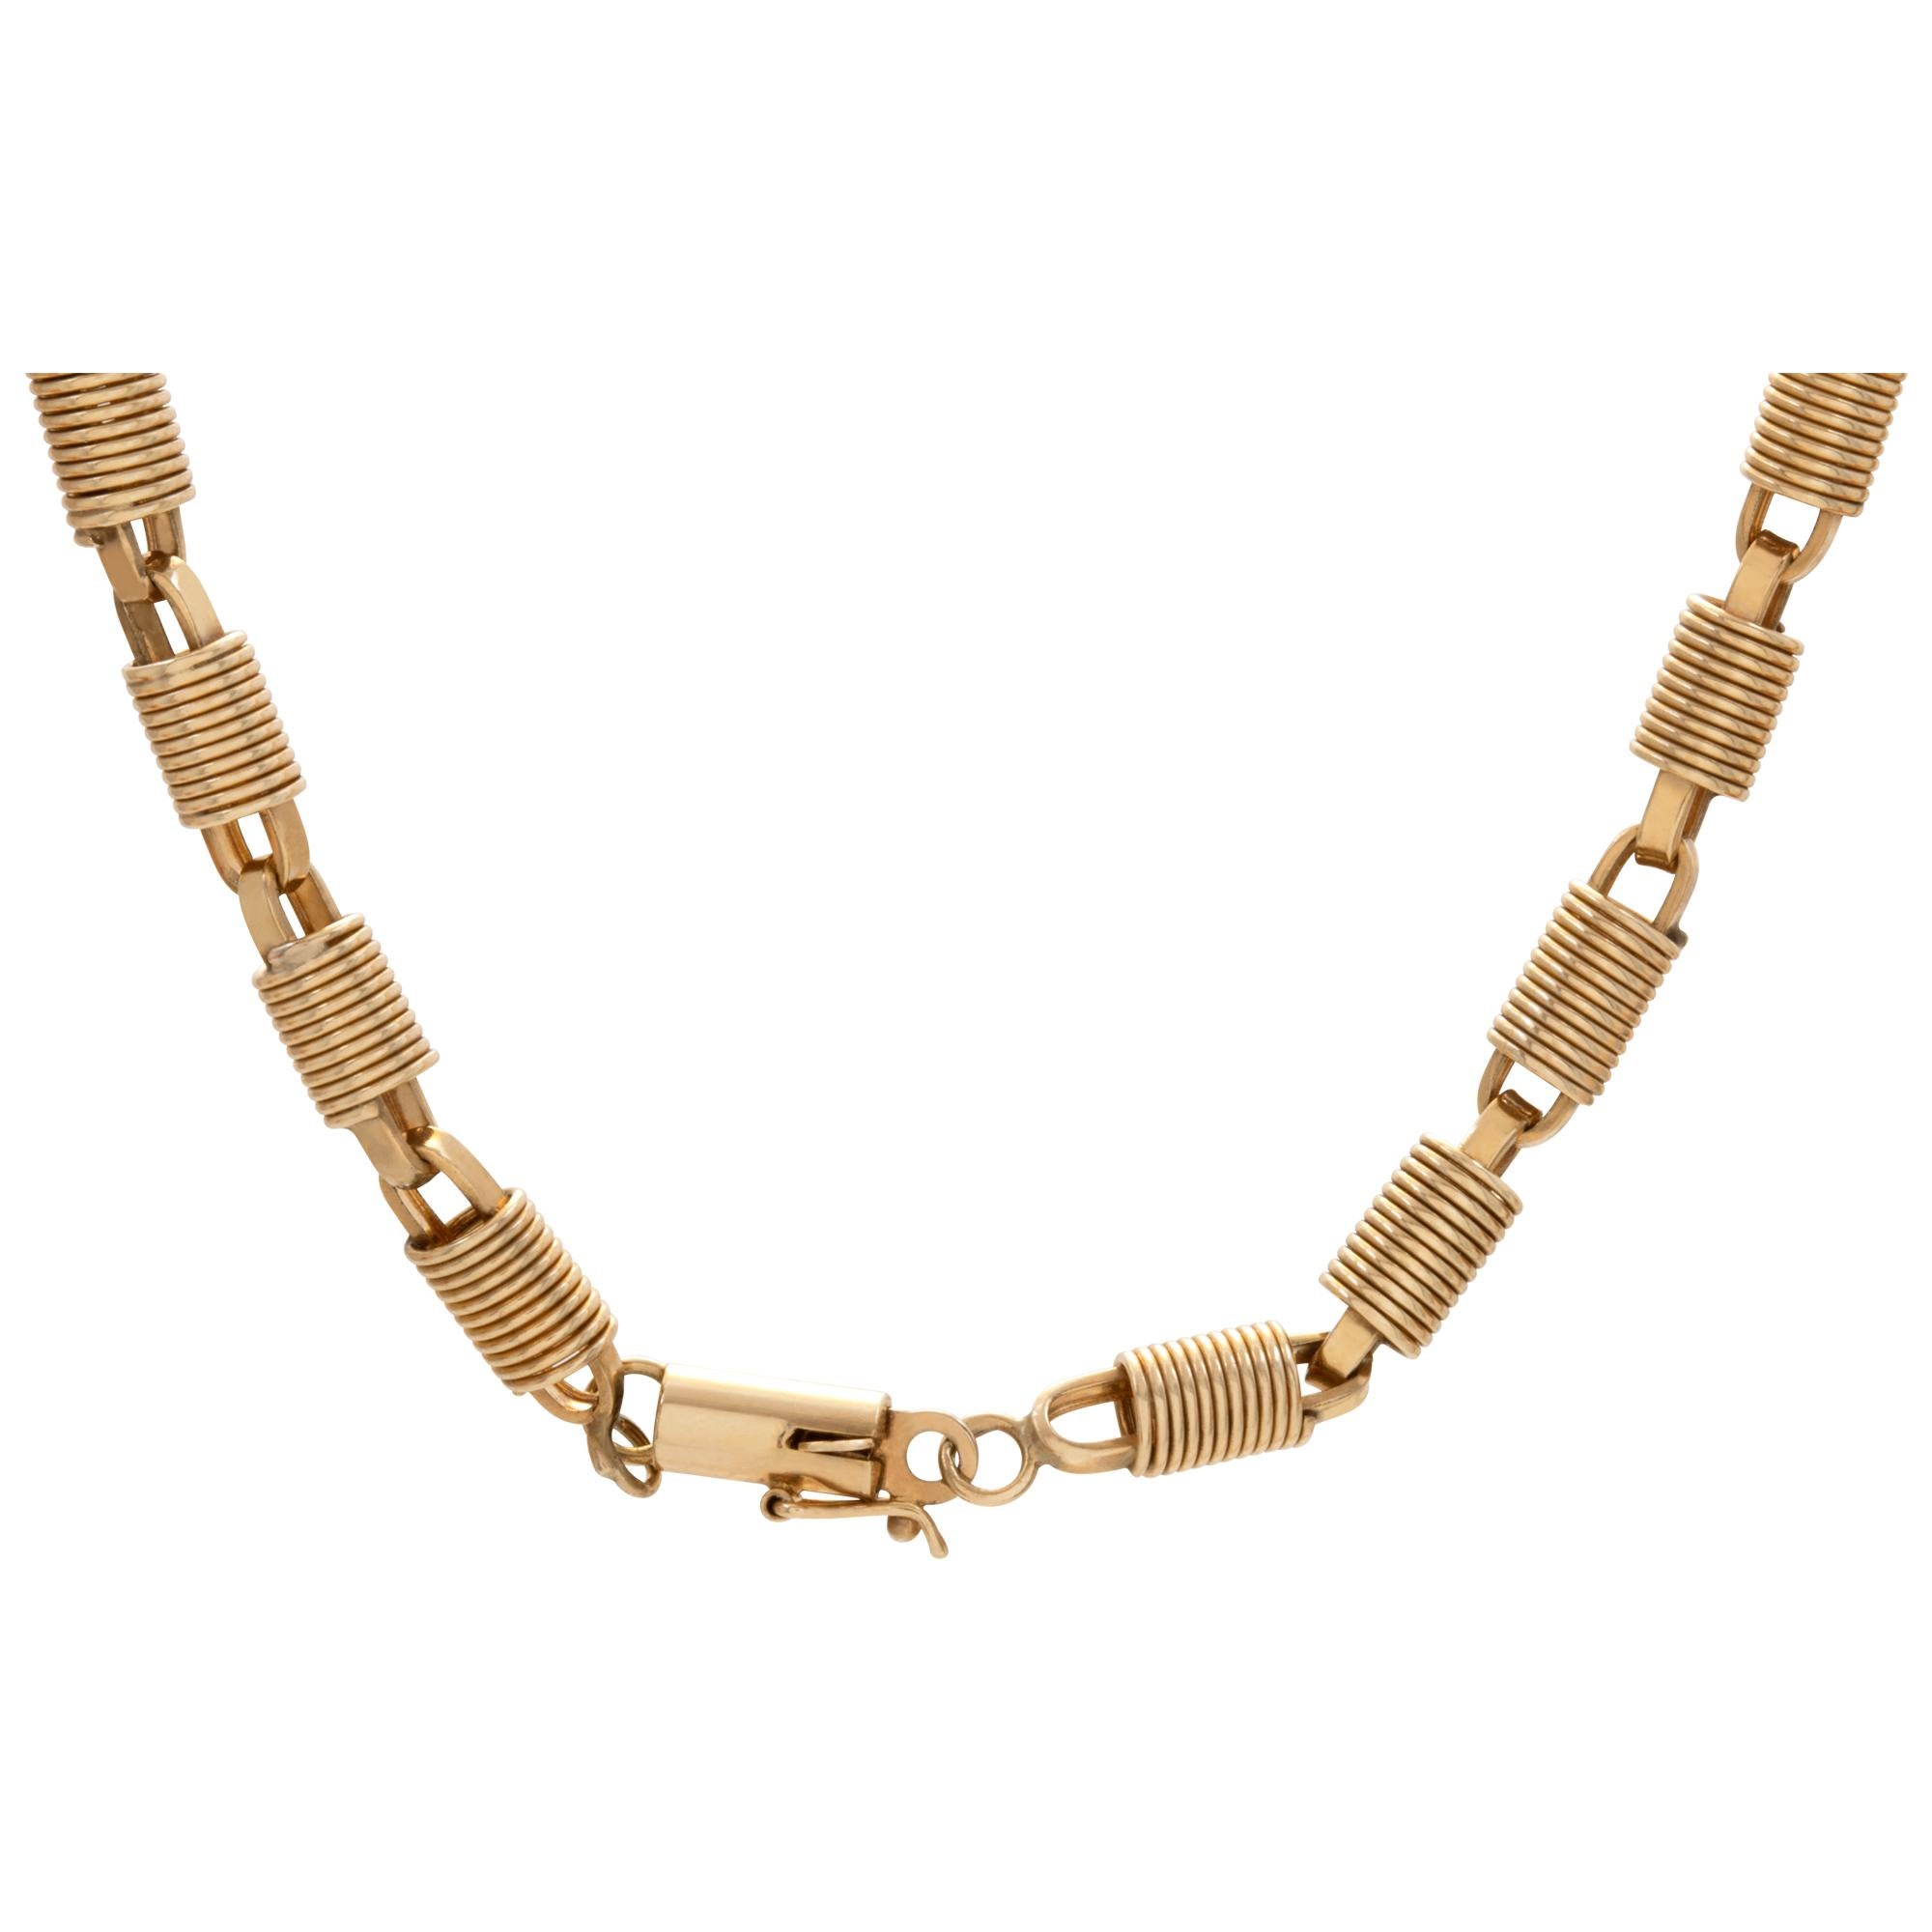 Women's or Men's Unique Barrel coil necklace in 14k yellow gold. Length 18